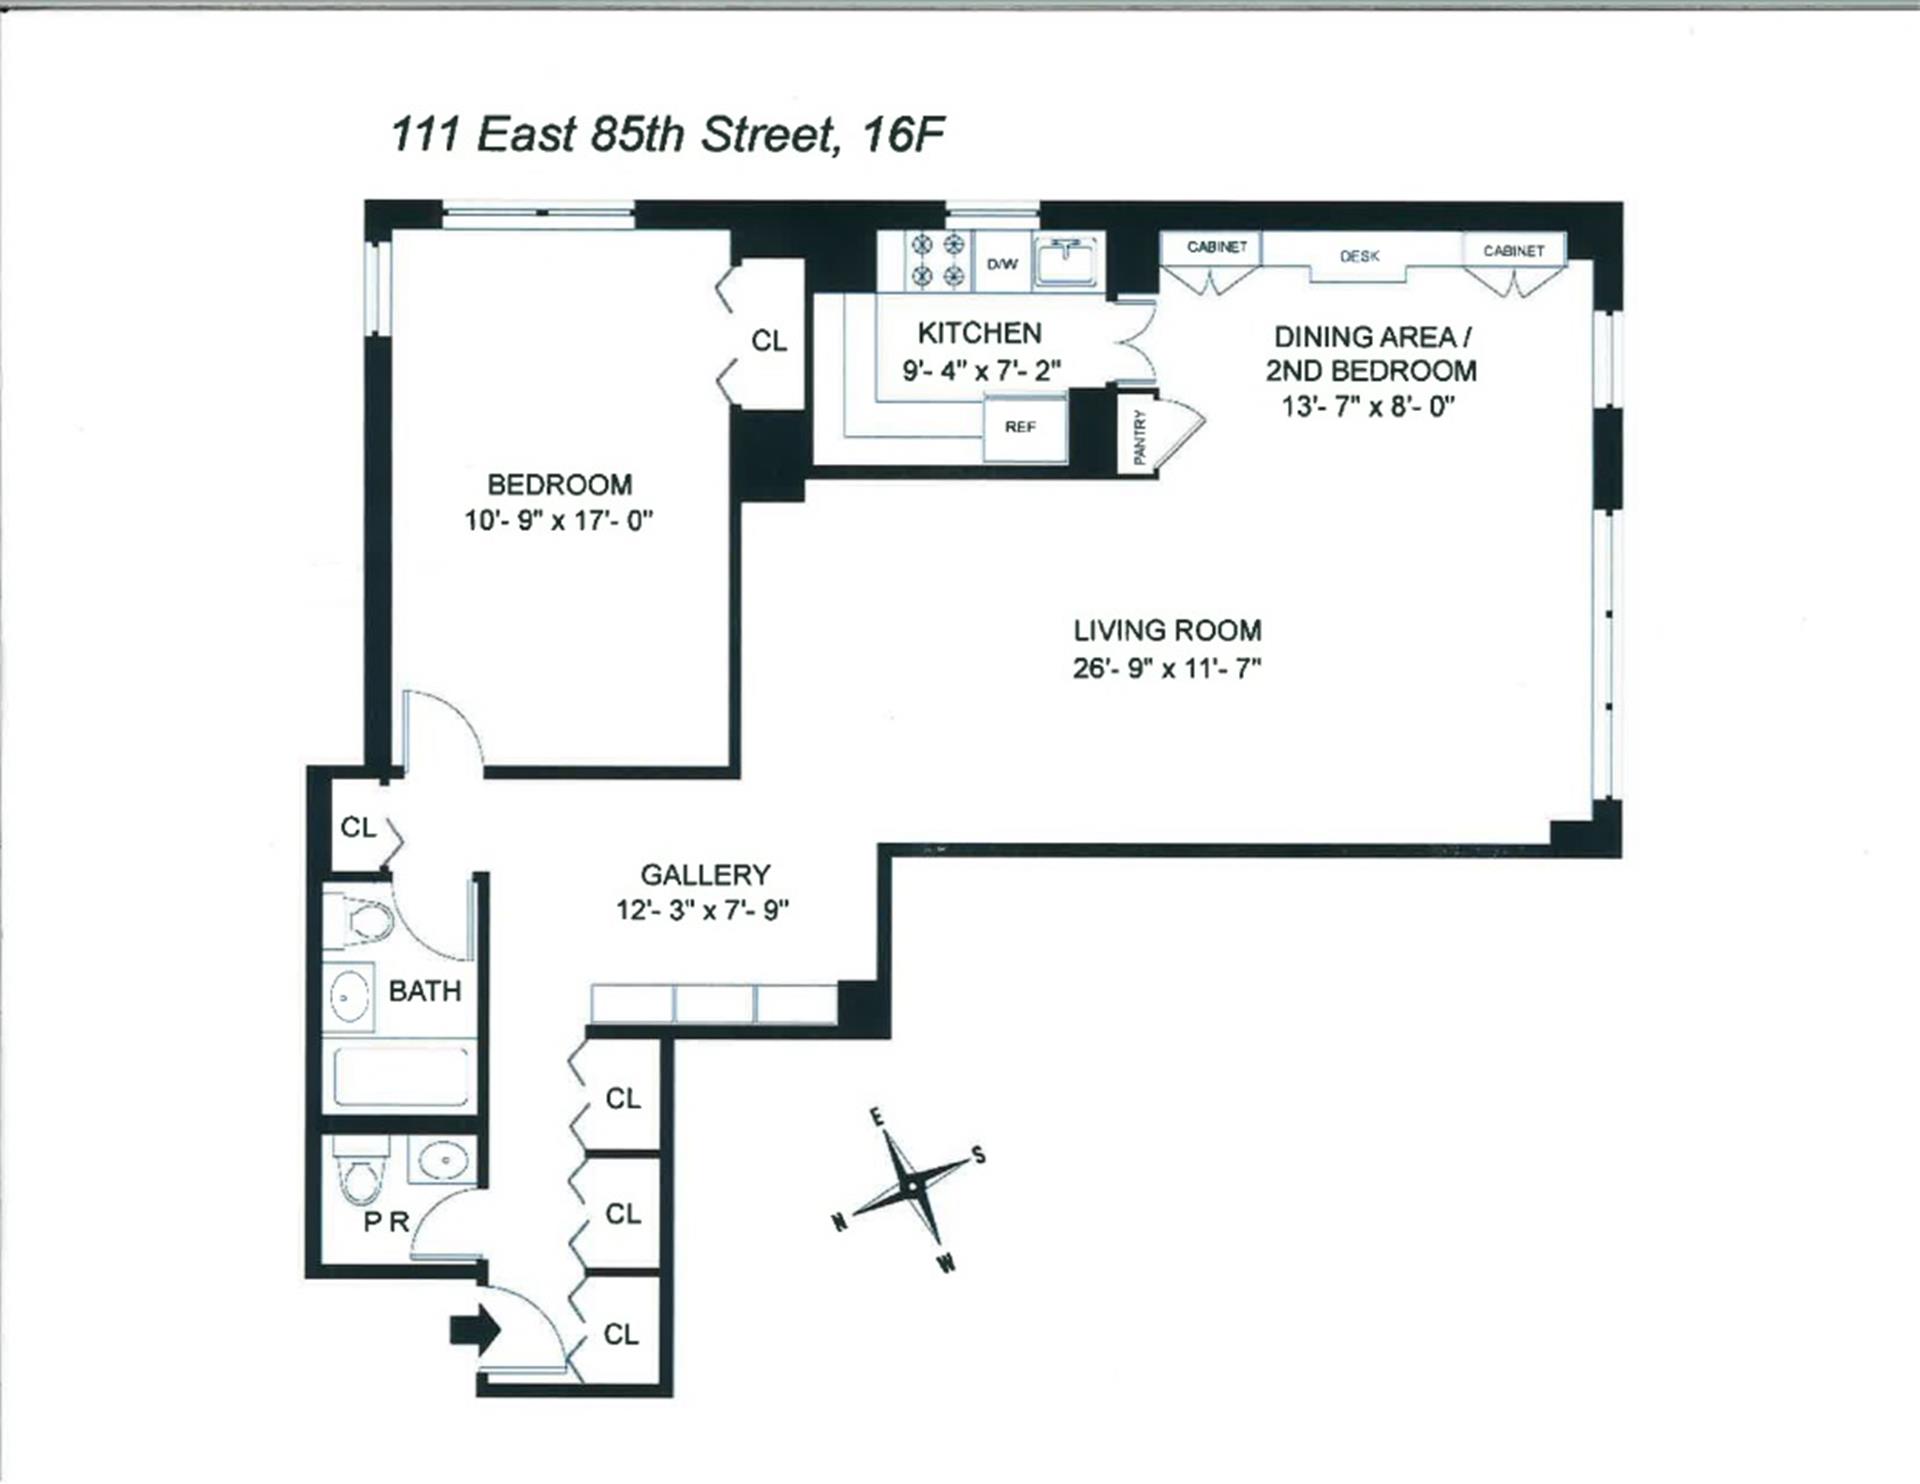 Floorplan for 111 East 85th Street, 16F